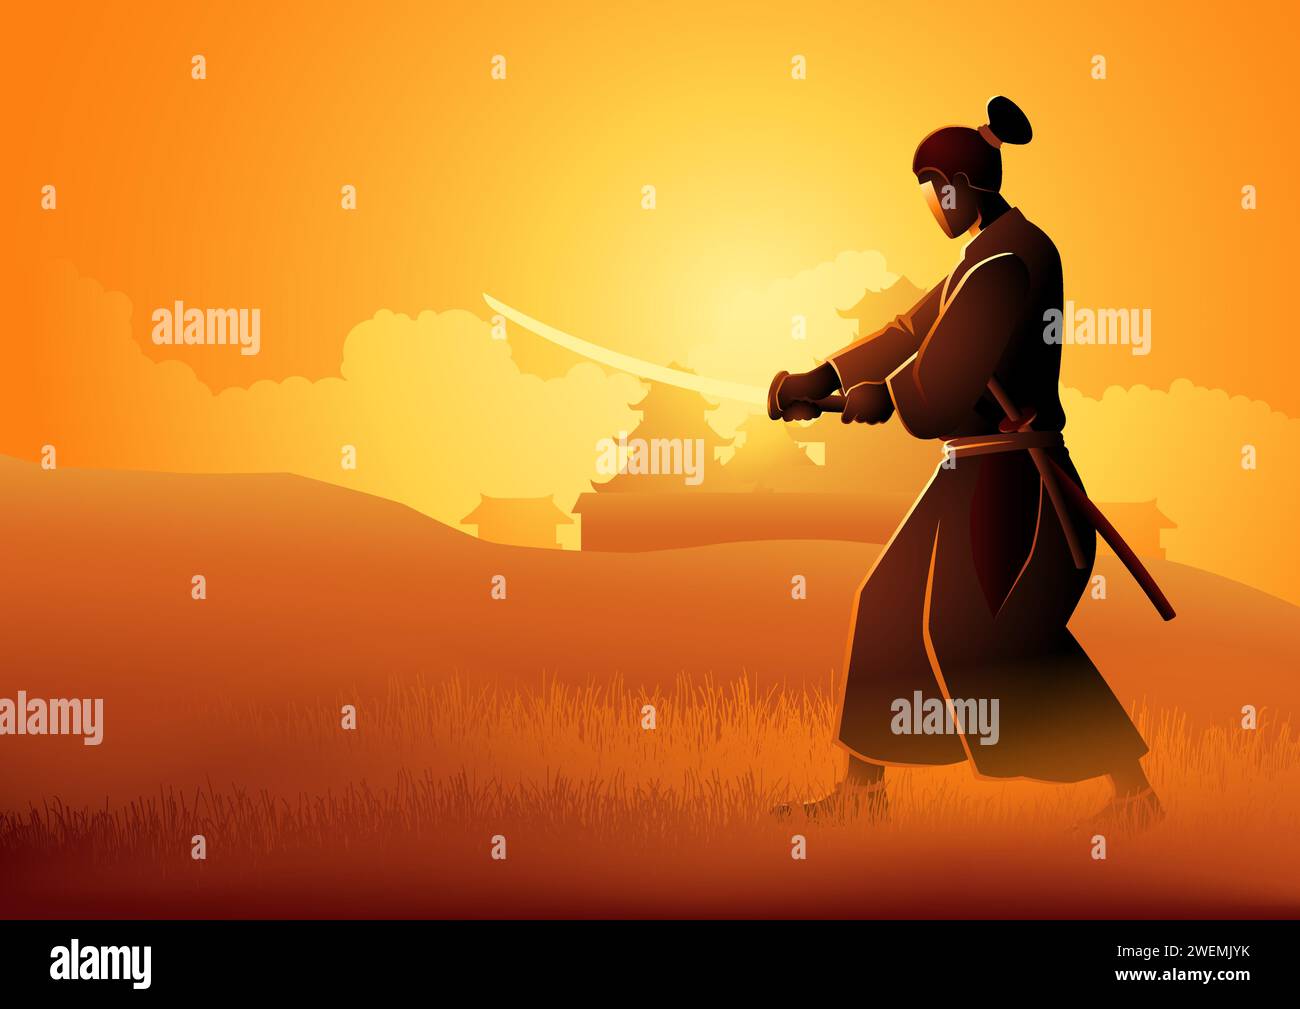 Vector illustration of a Samurai training on grass field Stock Vector